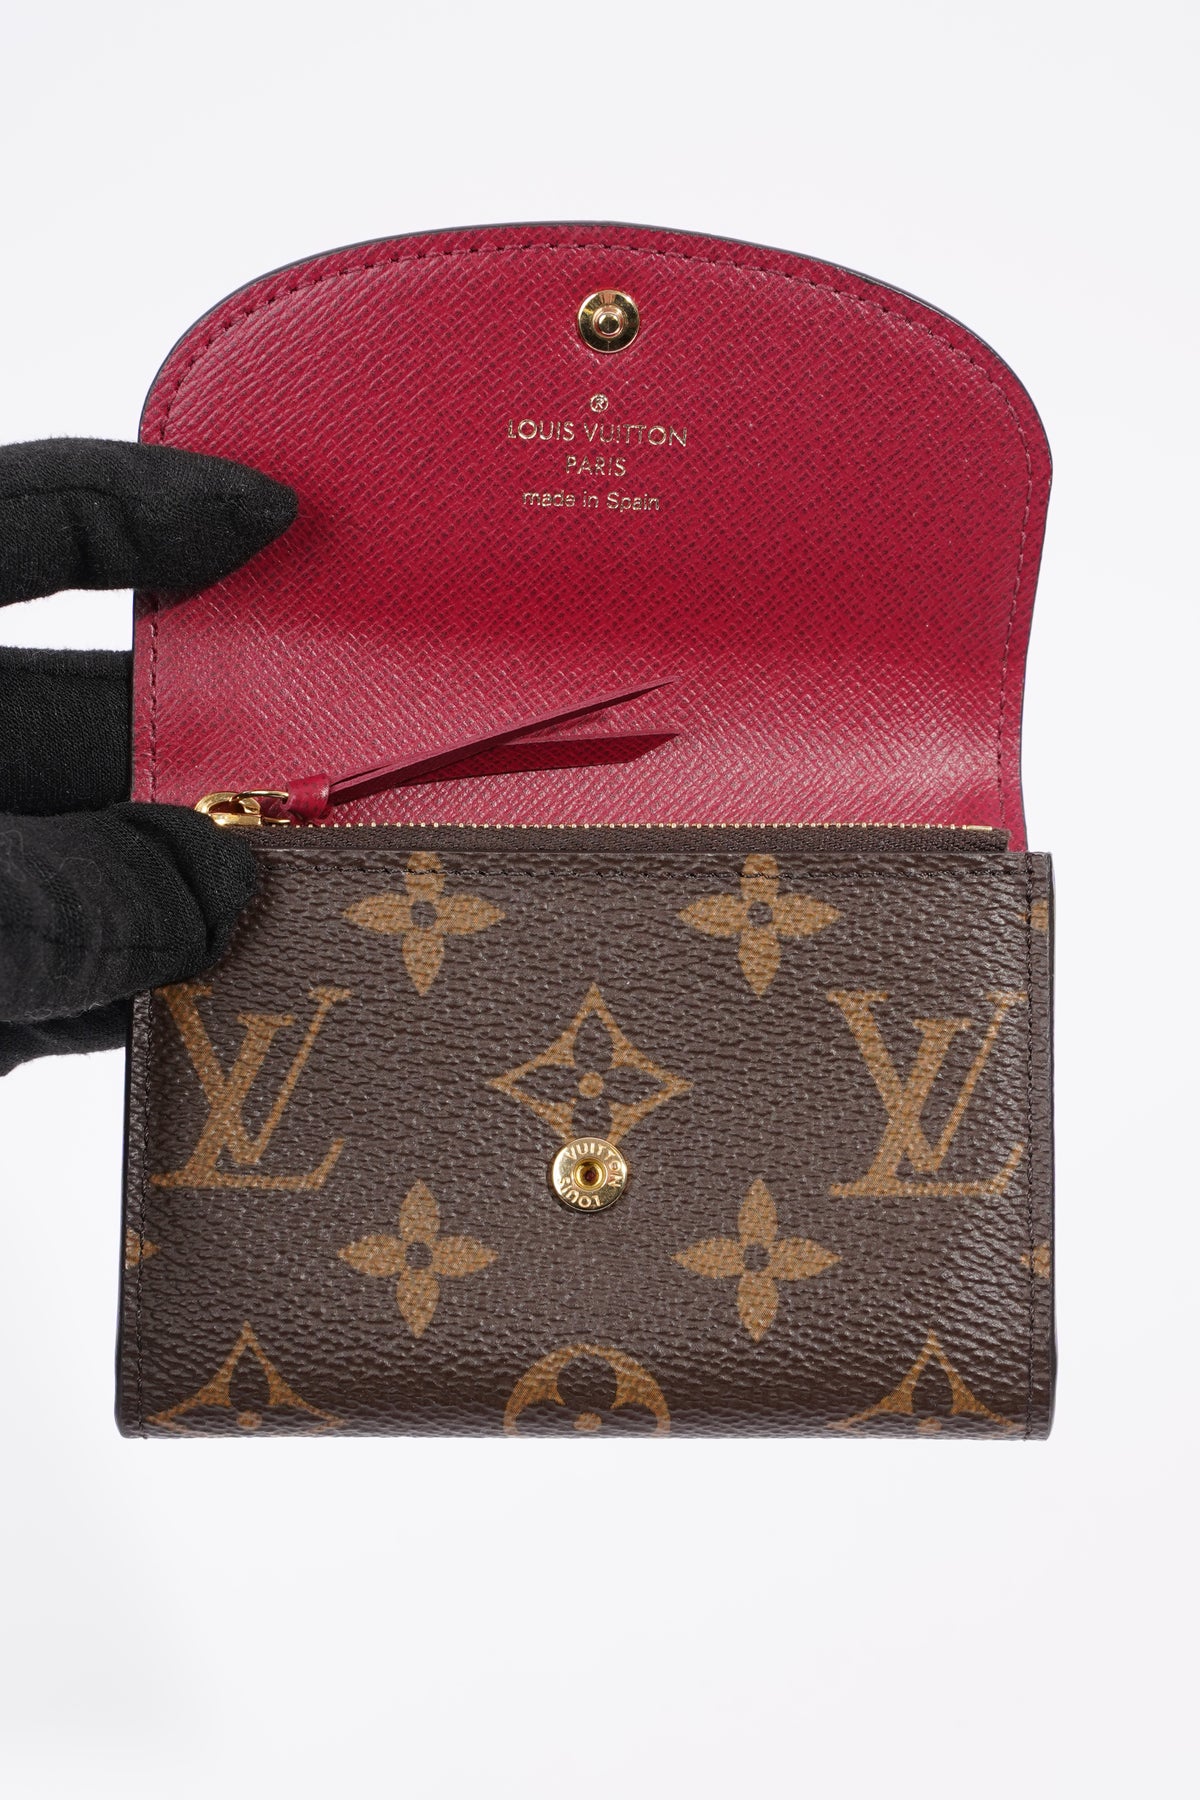 Louis Vuitton Rosalie Coin Purse Wallet : Review - YouTube